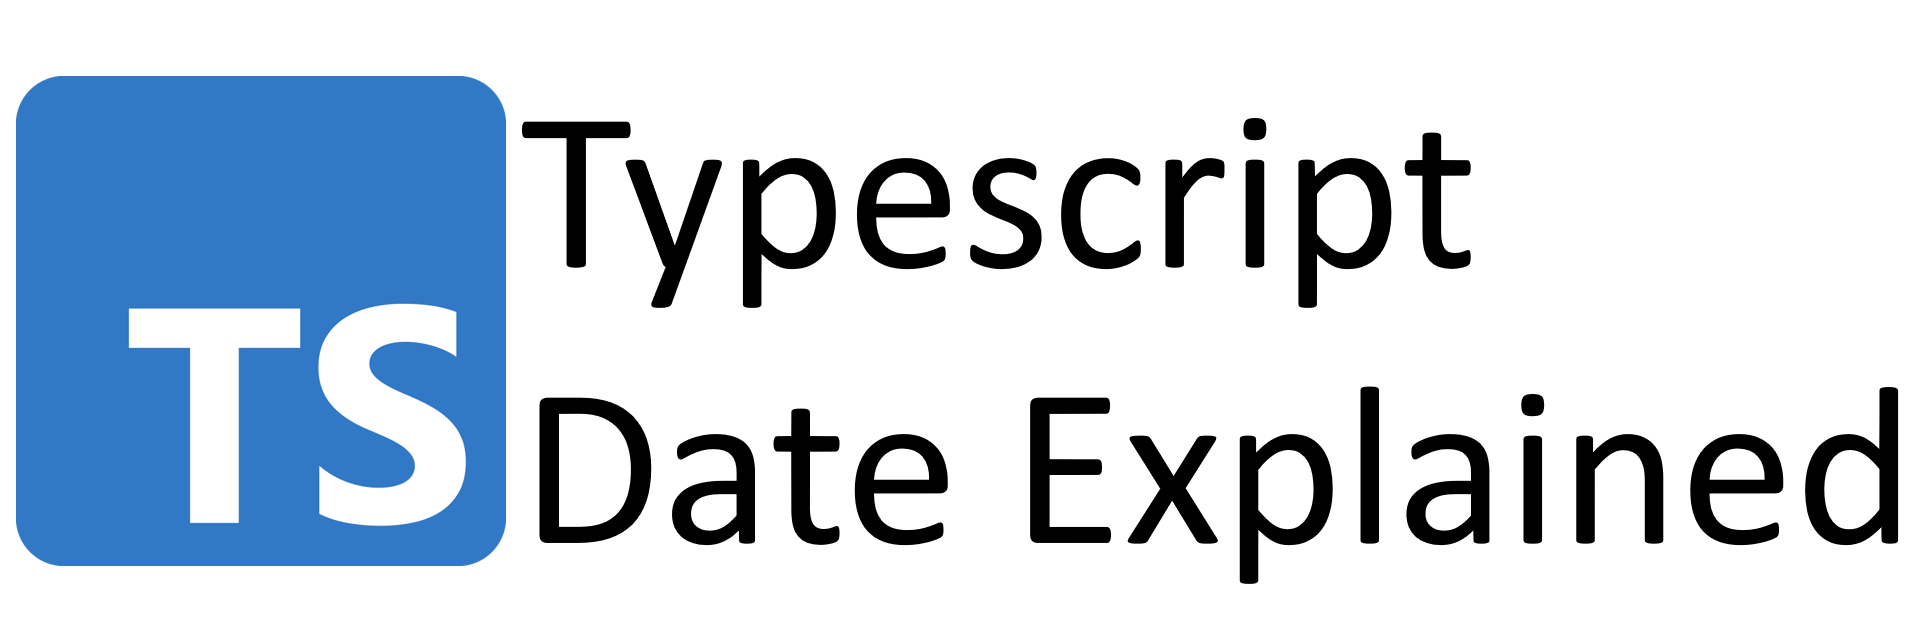 Typscript date explained